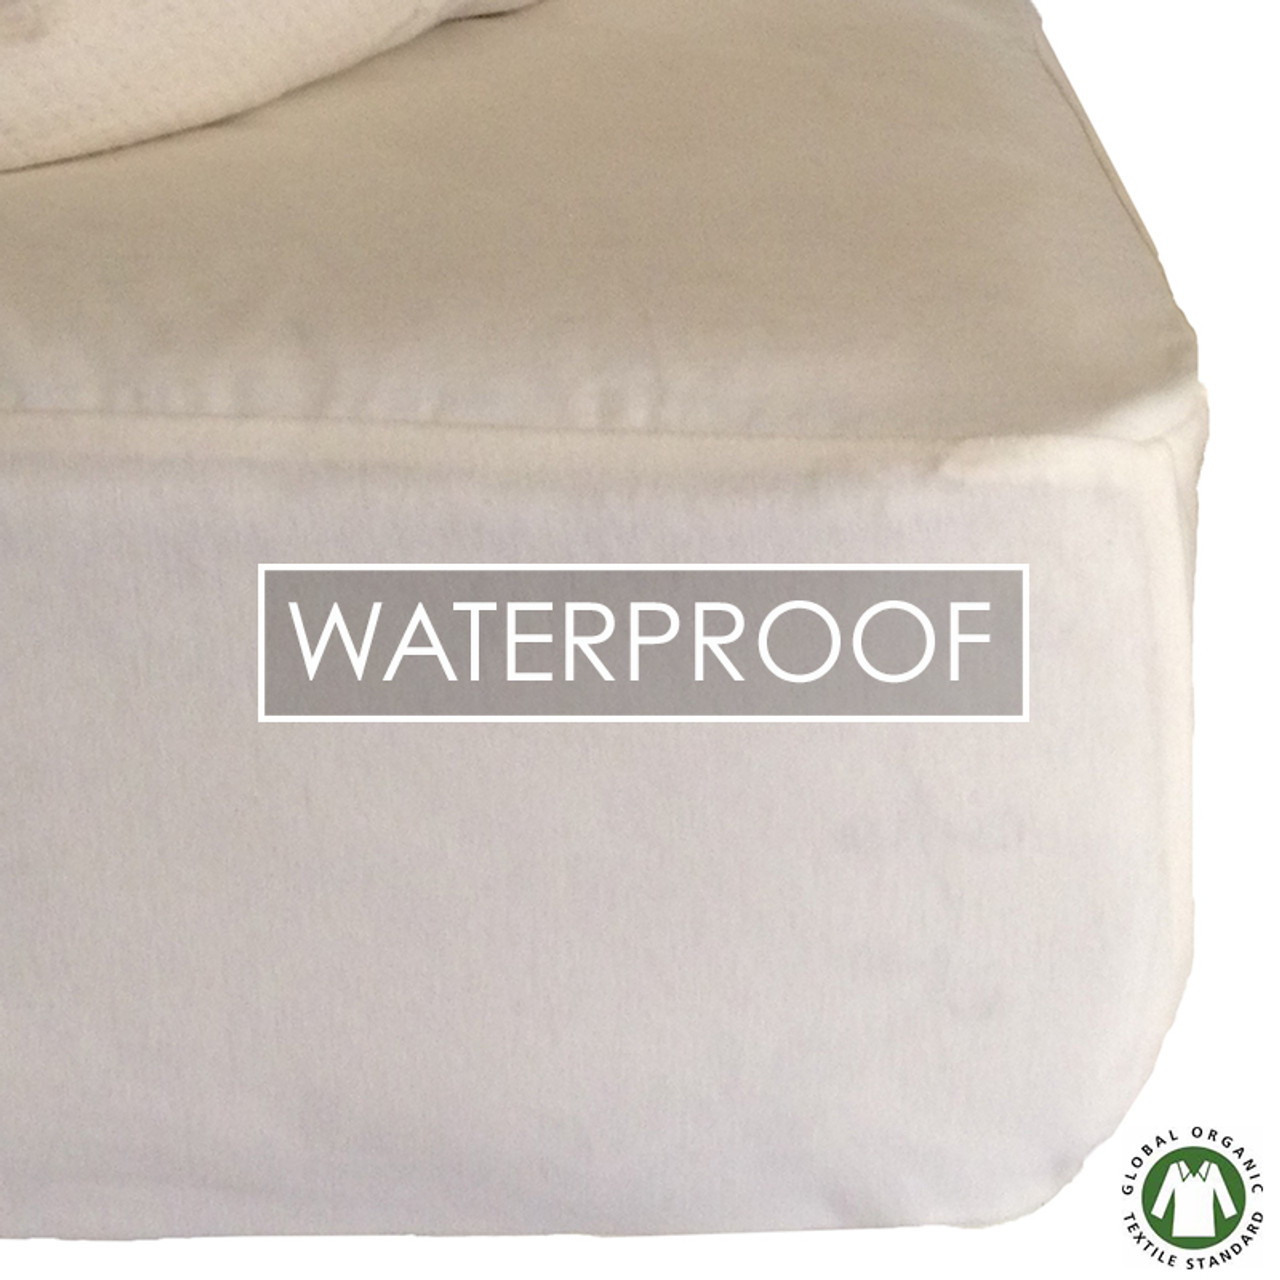 Waterproof Mattress Protector With Organic Materials